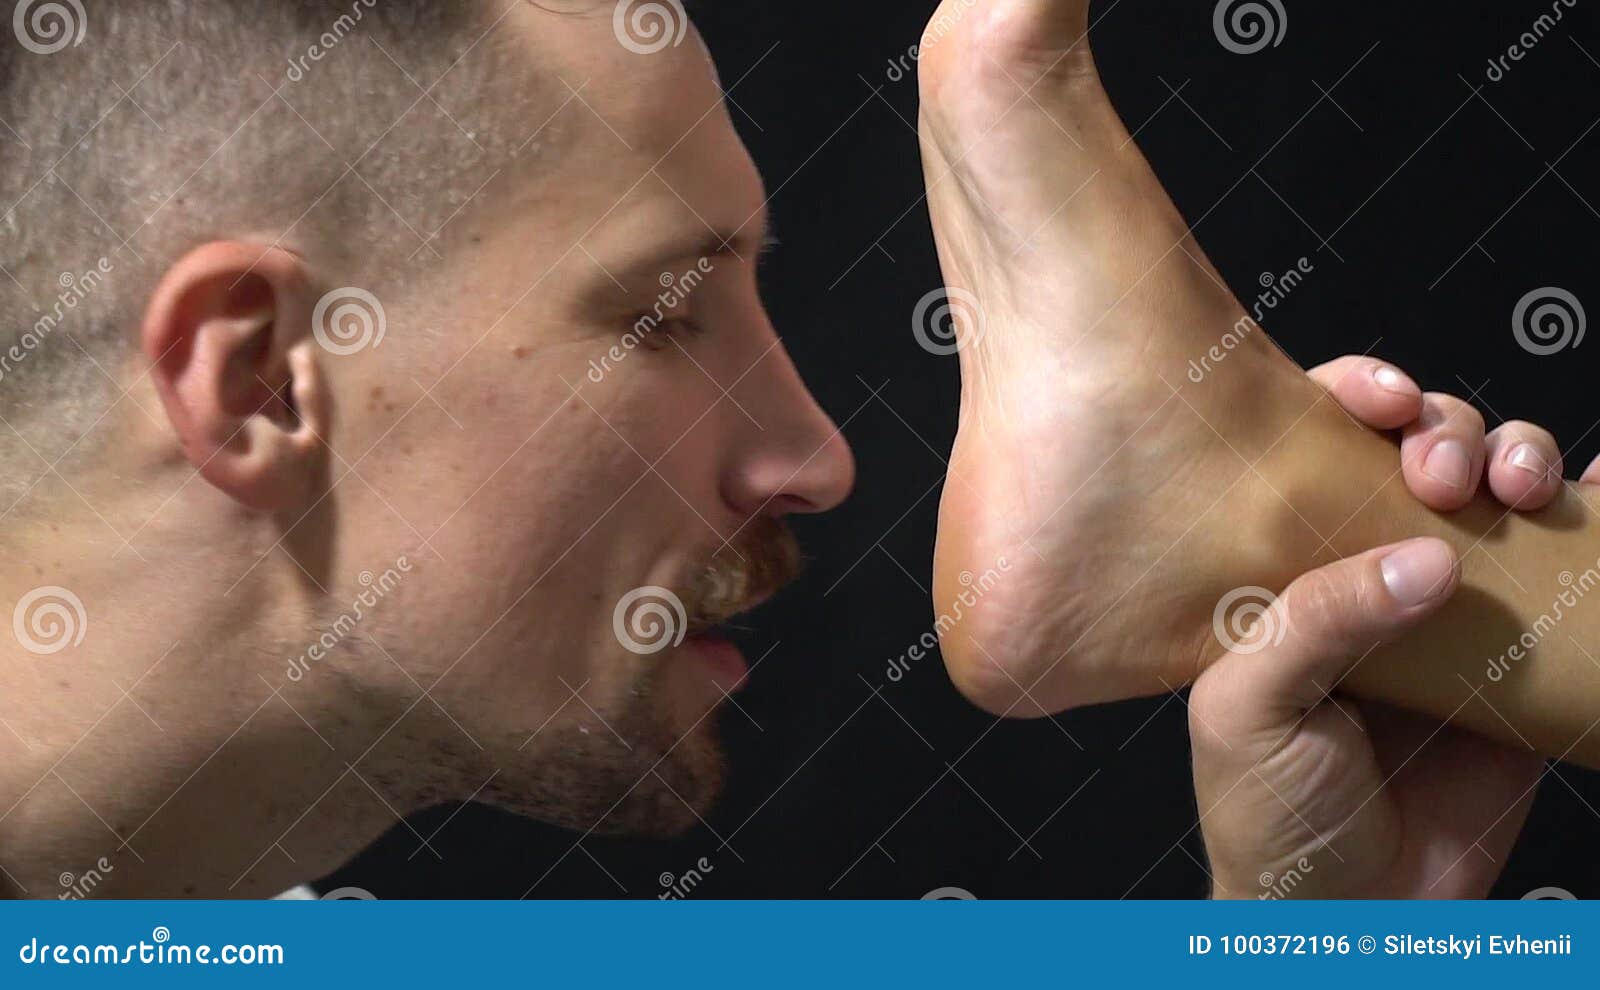 Lick male feet